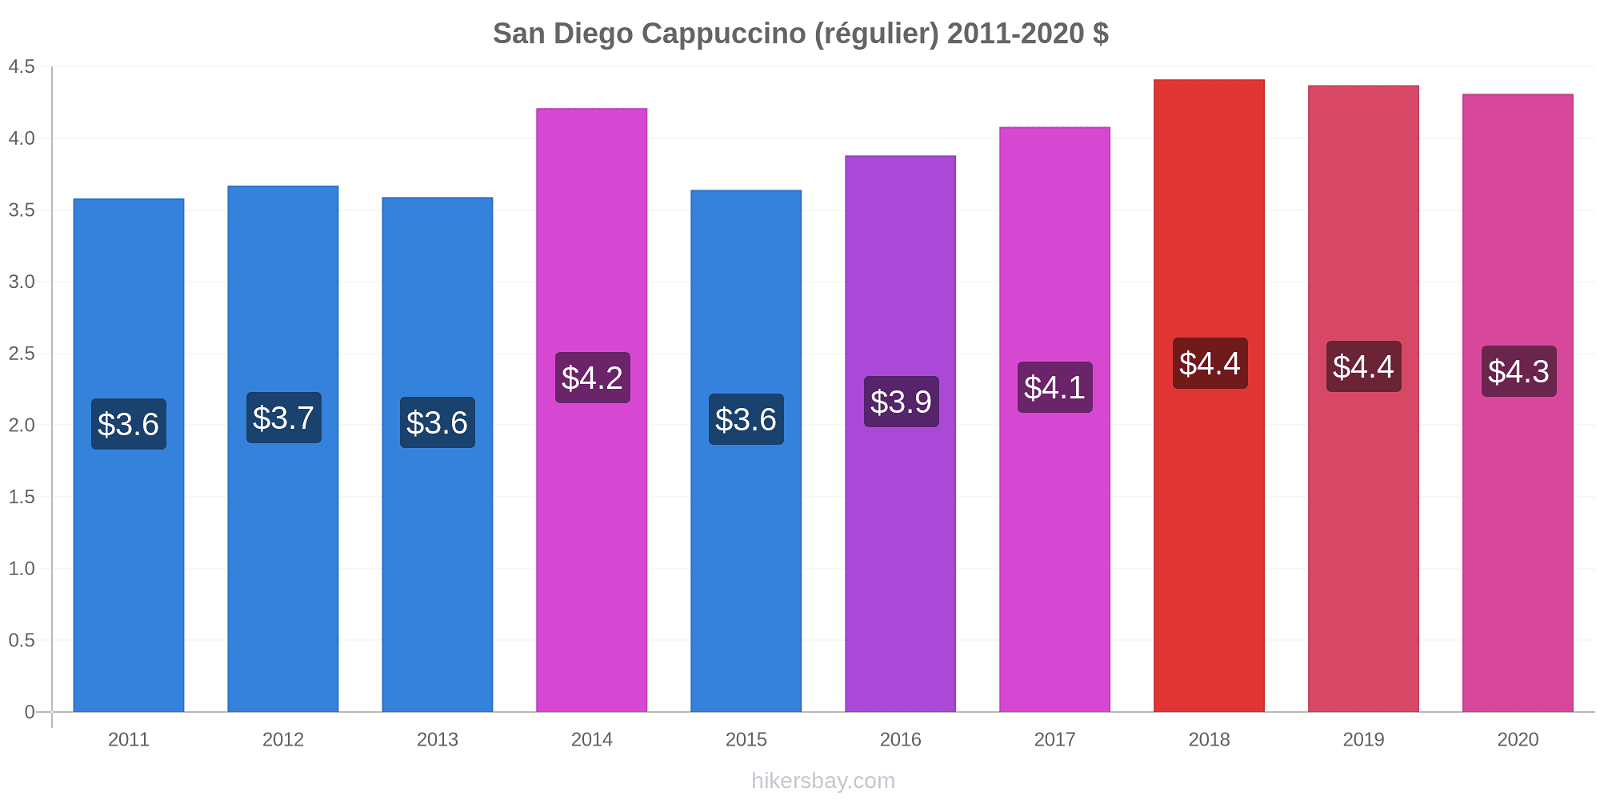 San Diego changements de prix Cappuccino (régulier) hikersbay.com